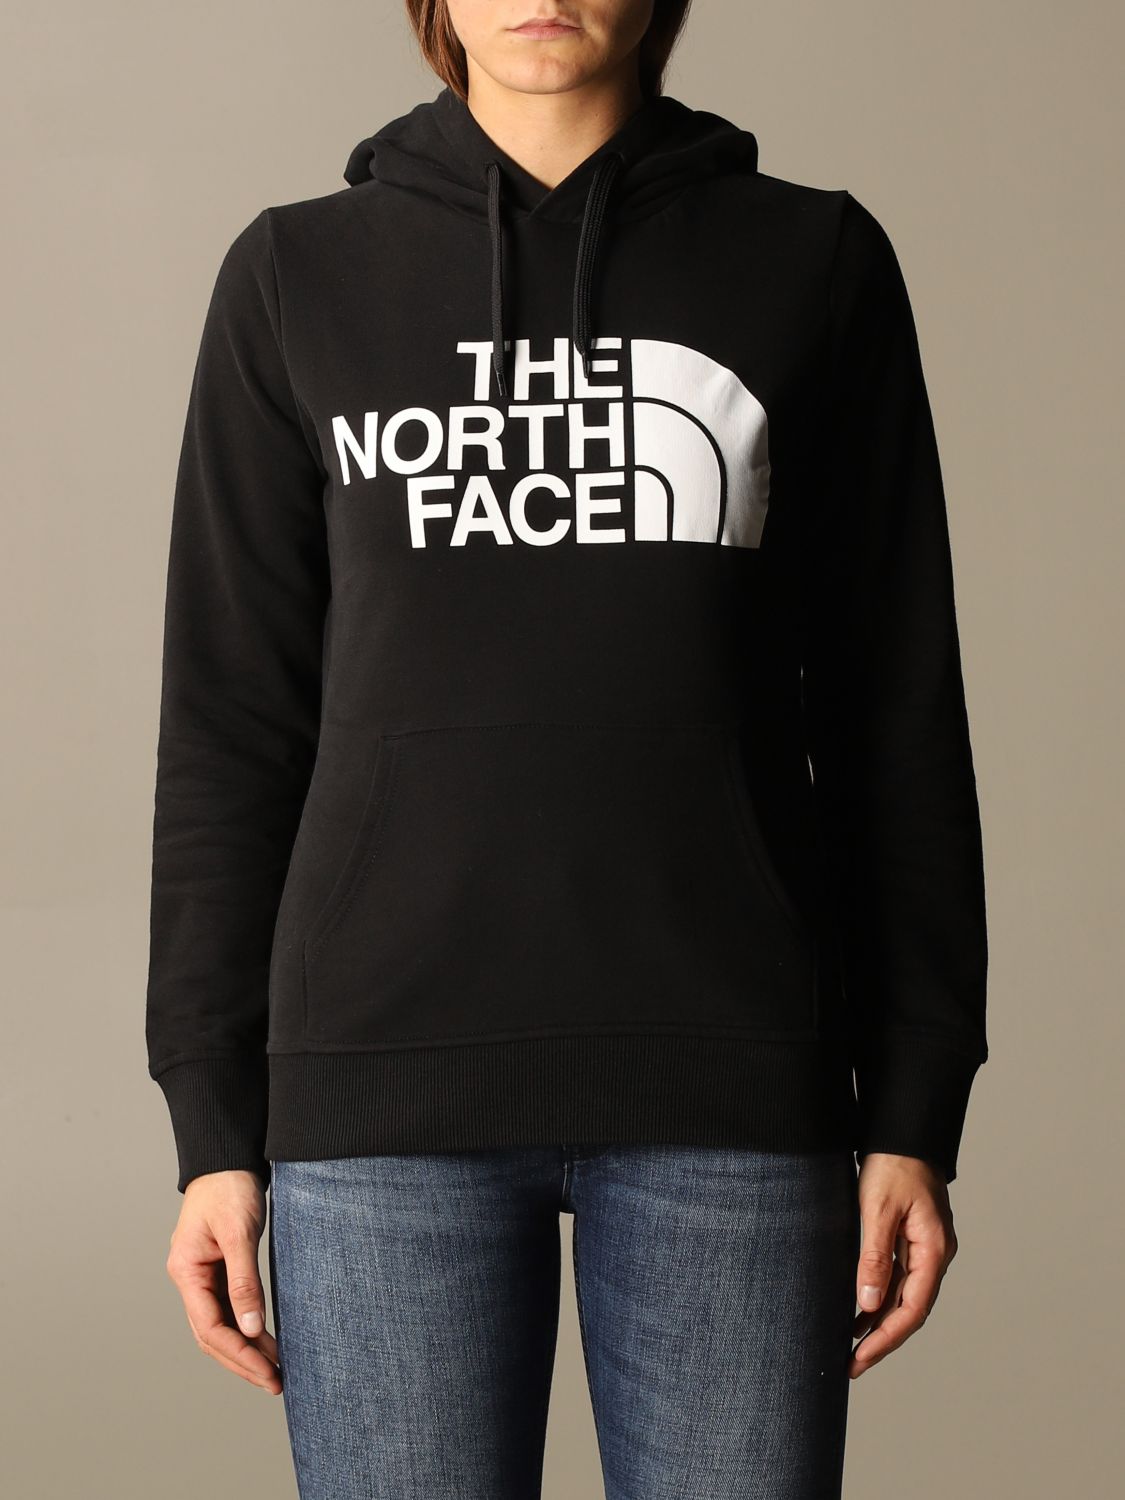 north face hooded sweatshirt women's